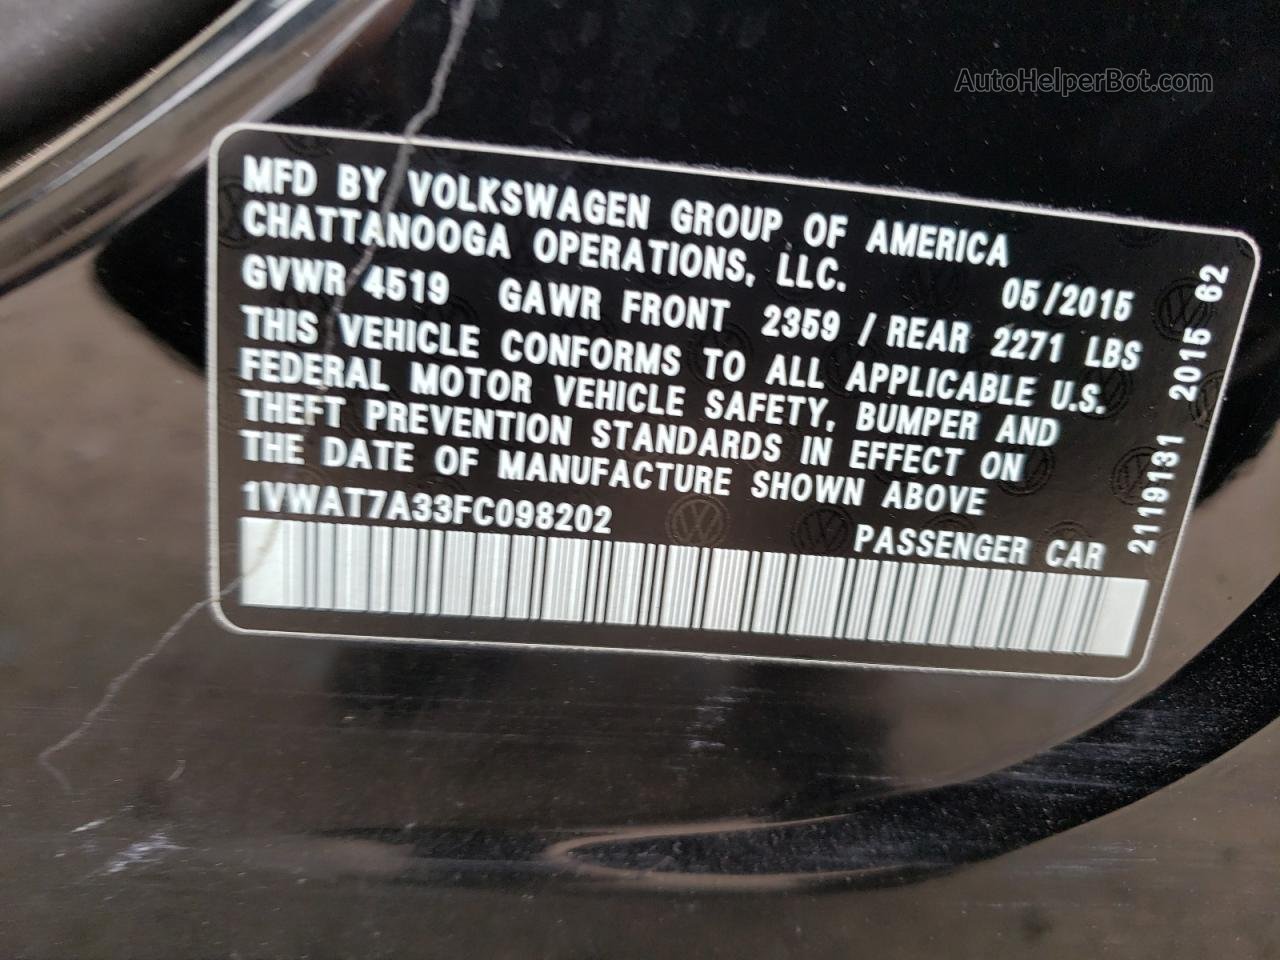 2015 Volkswagen Passat S Black vin: 1VWAT7A33FC098202